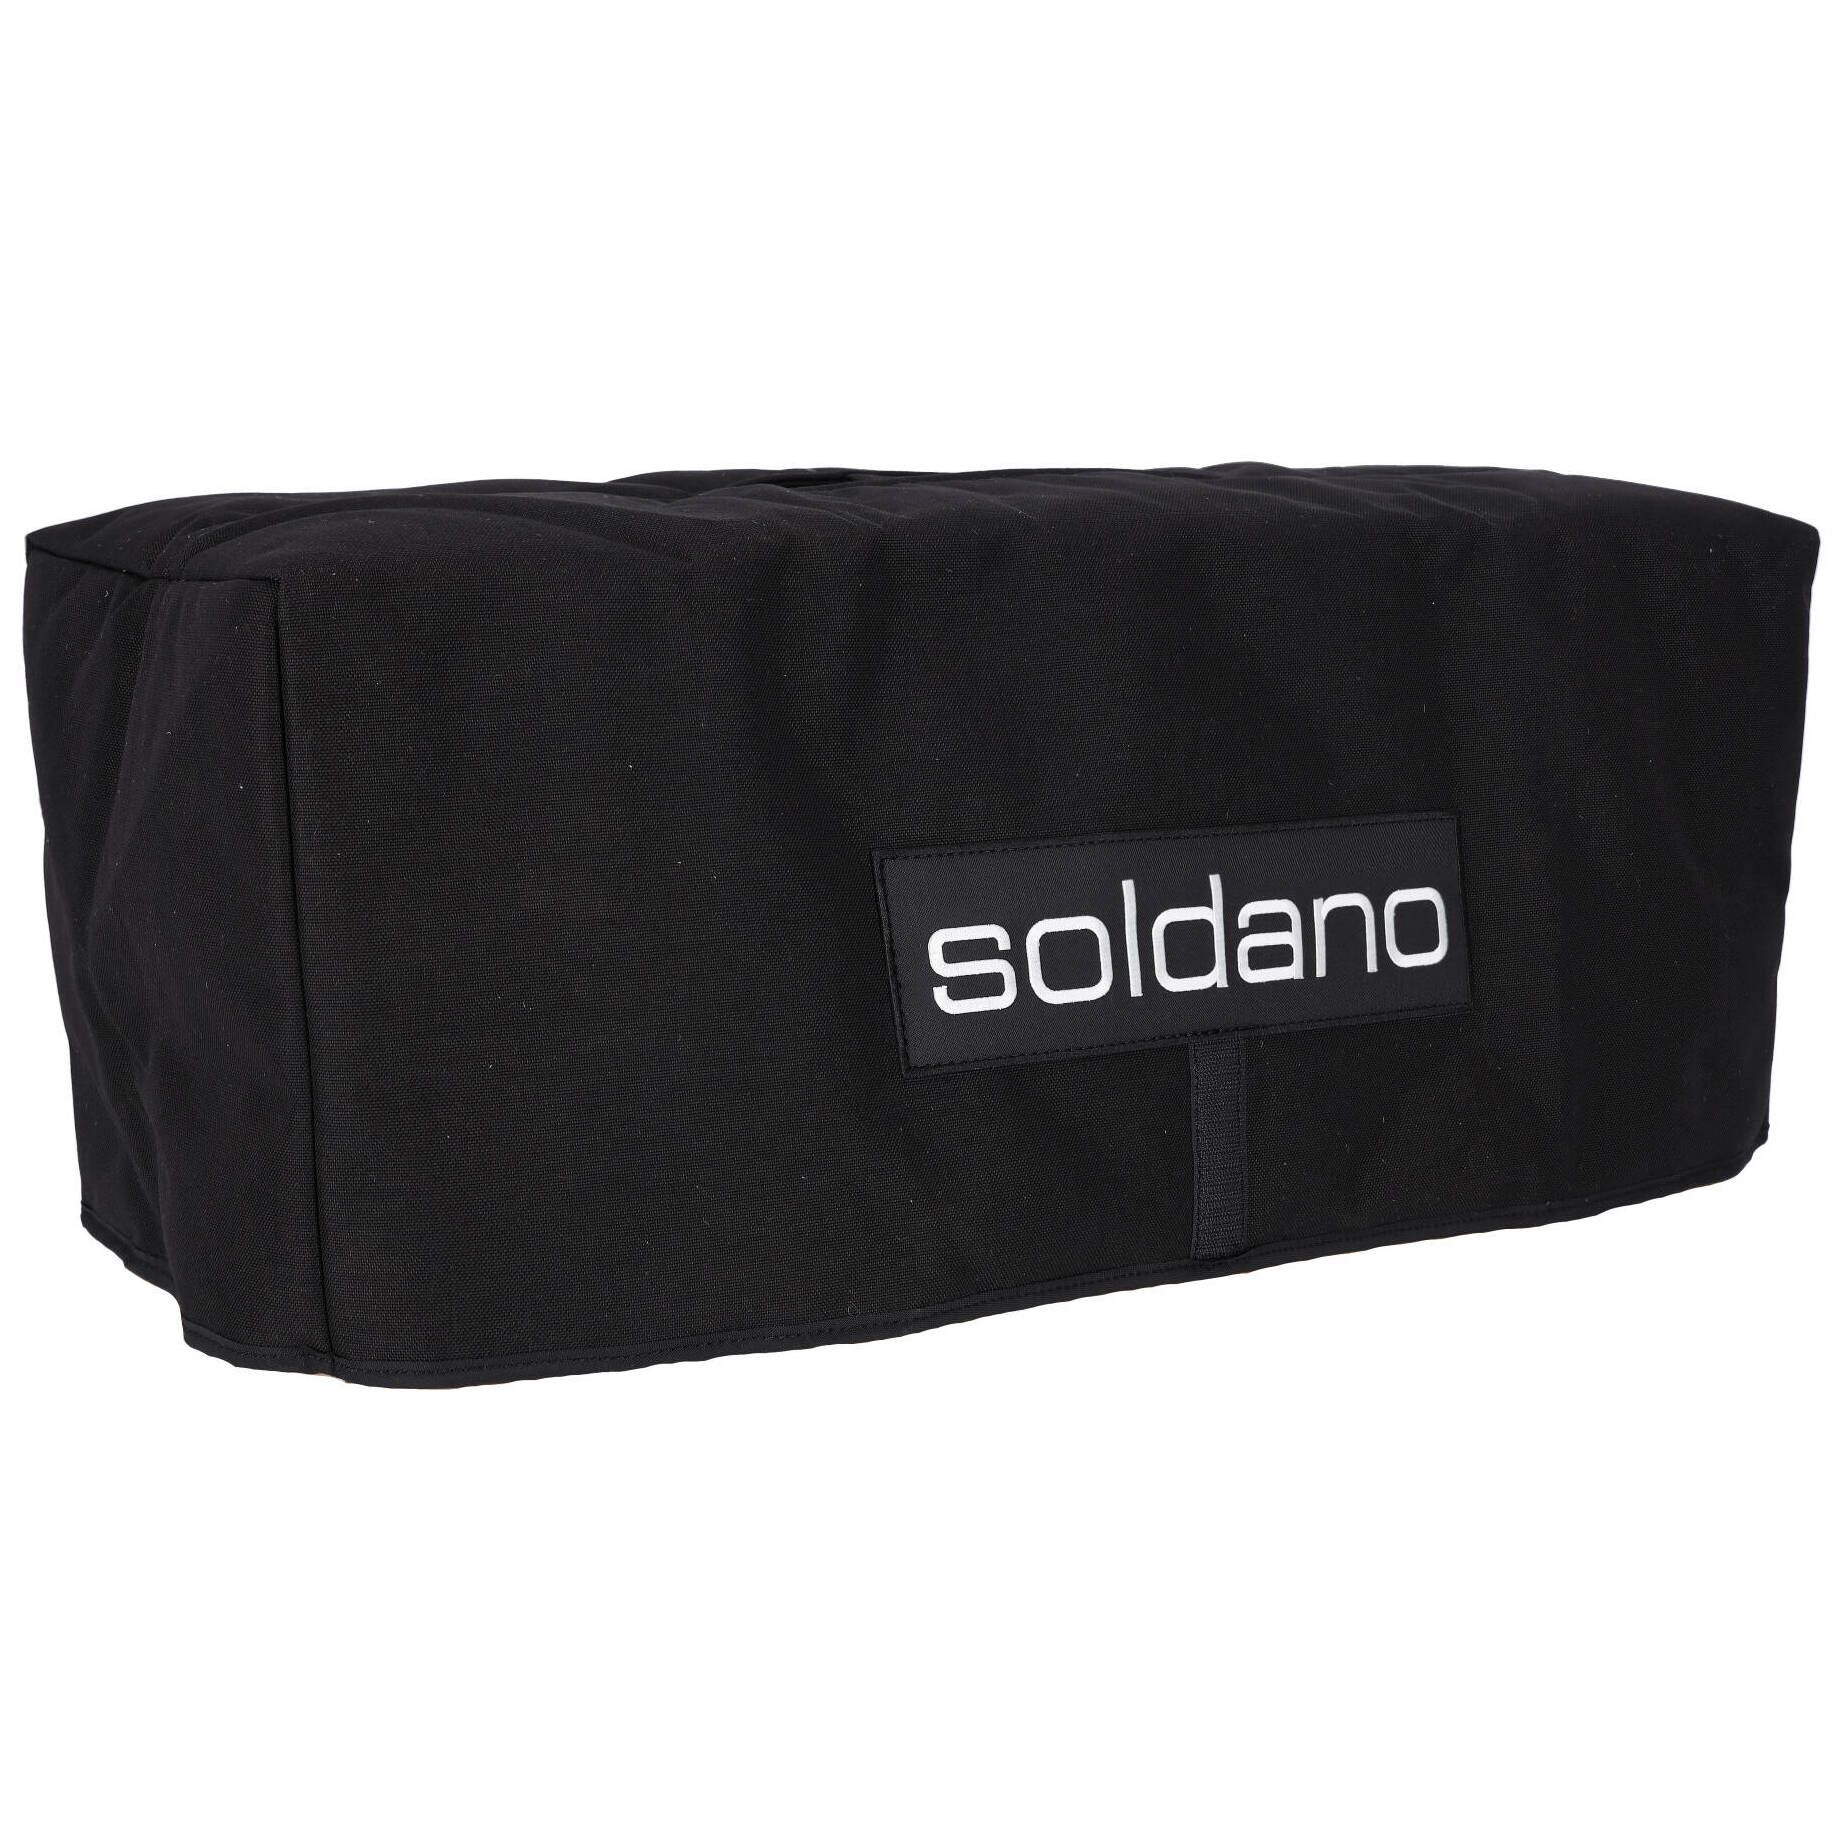 Soldano SLO-100 COVER 2